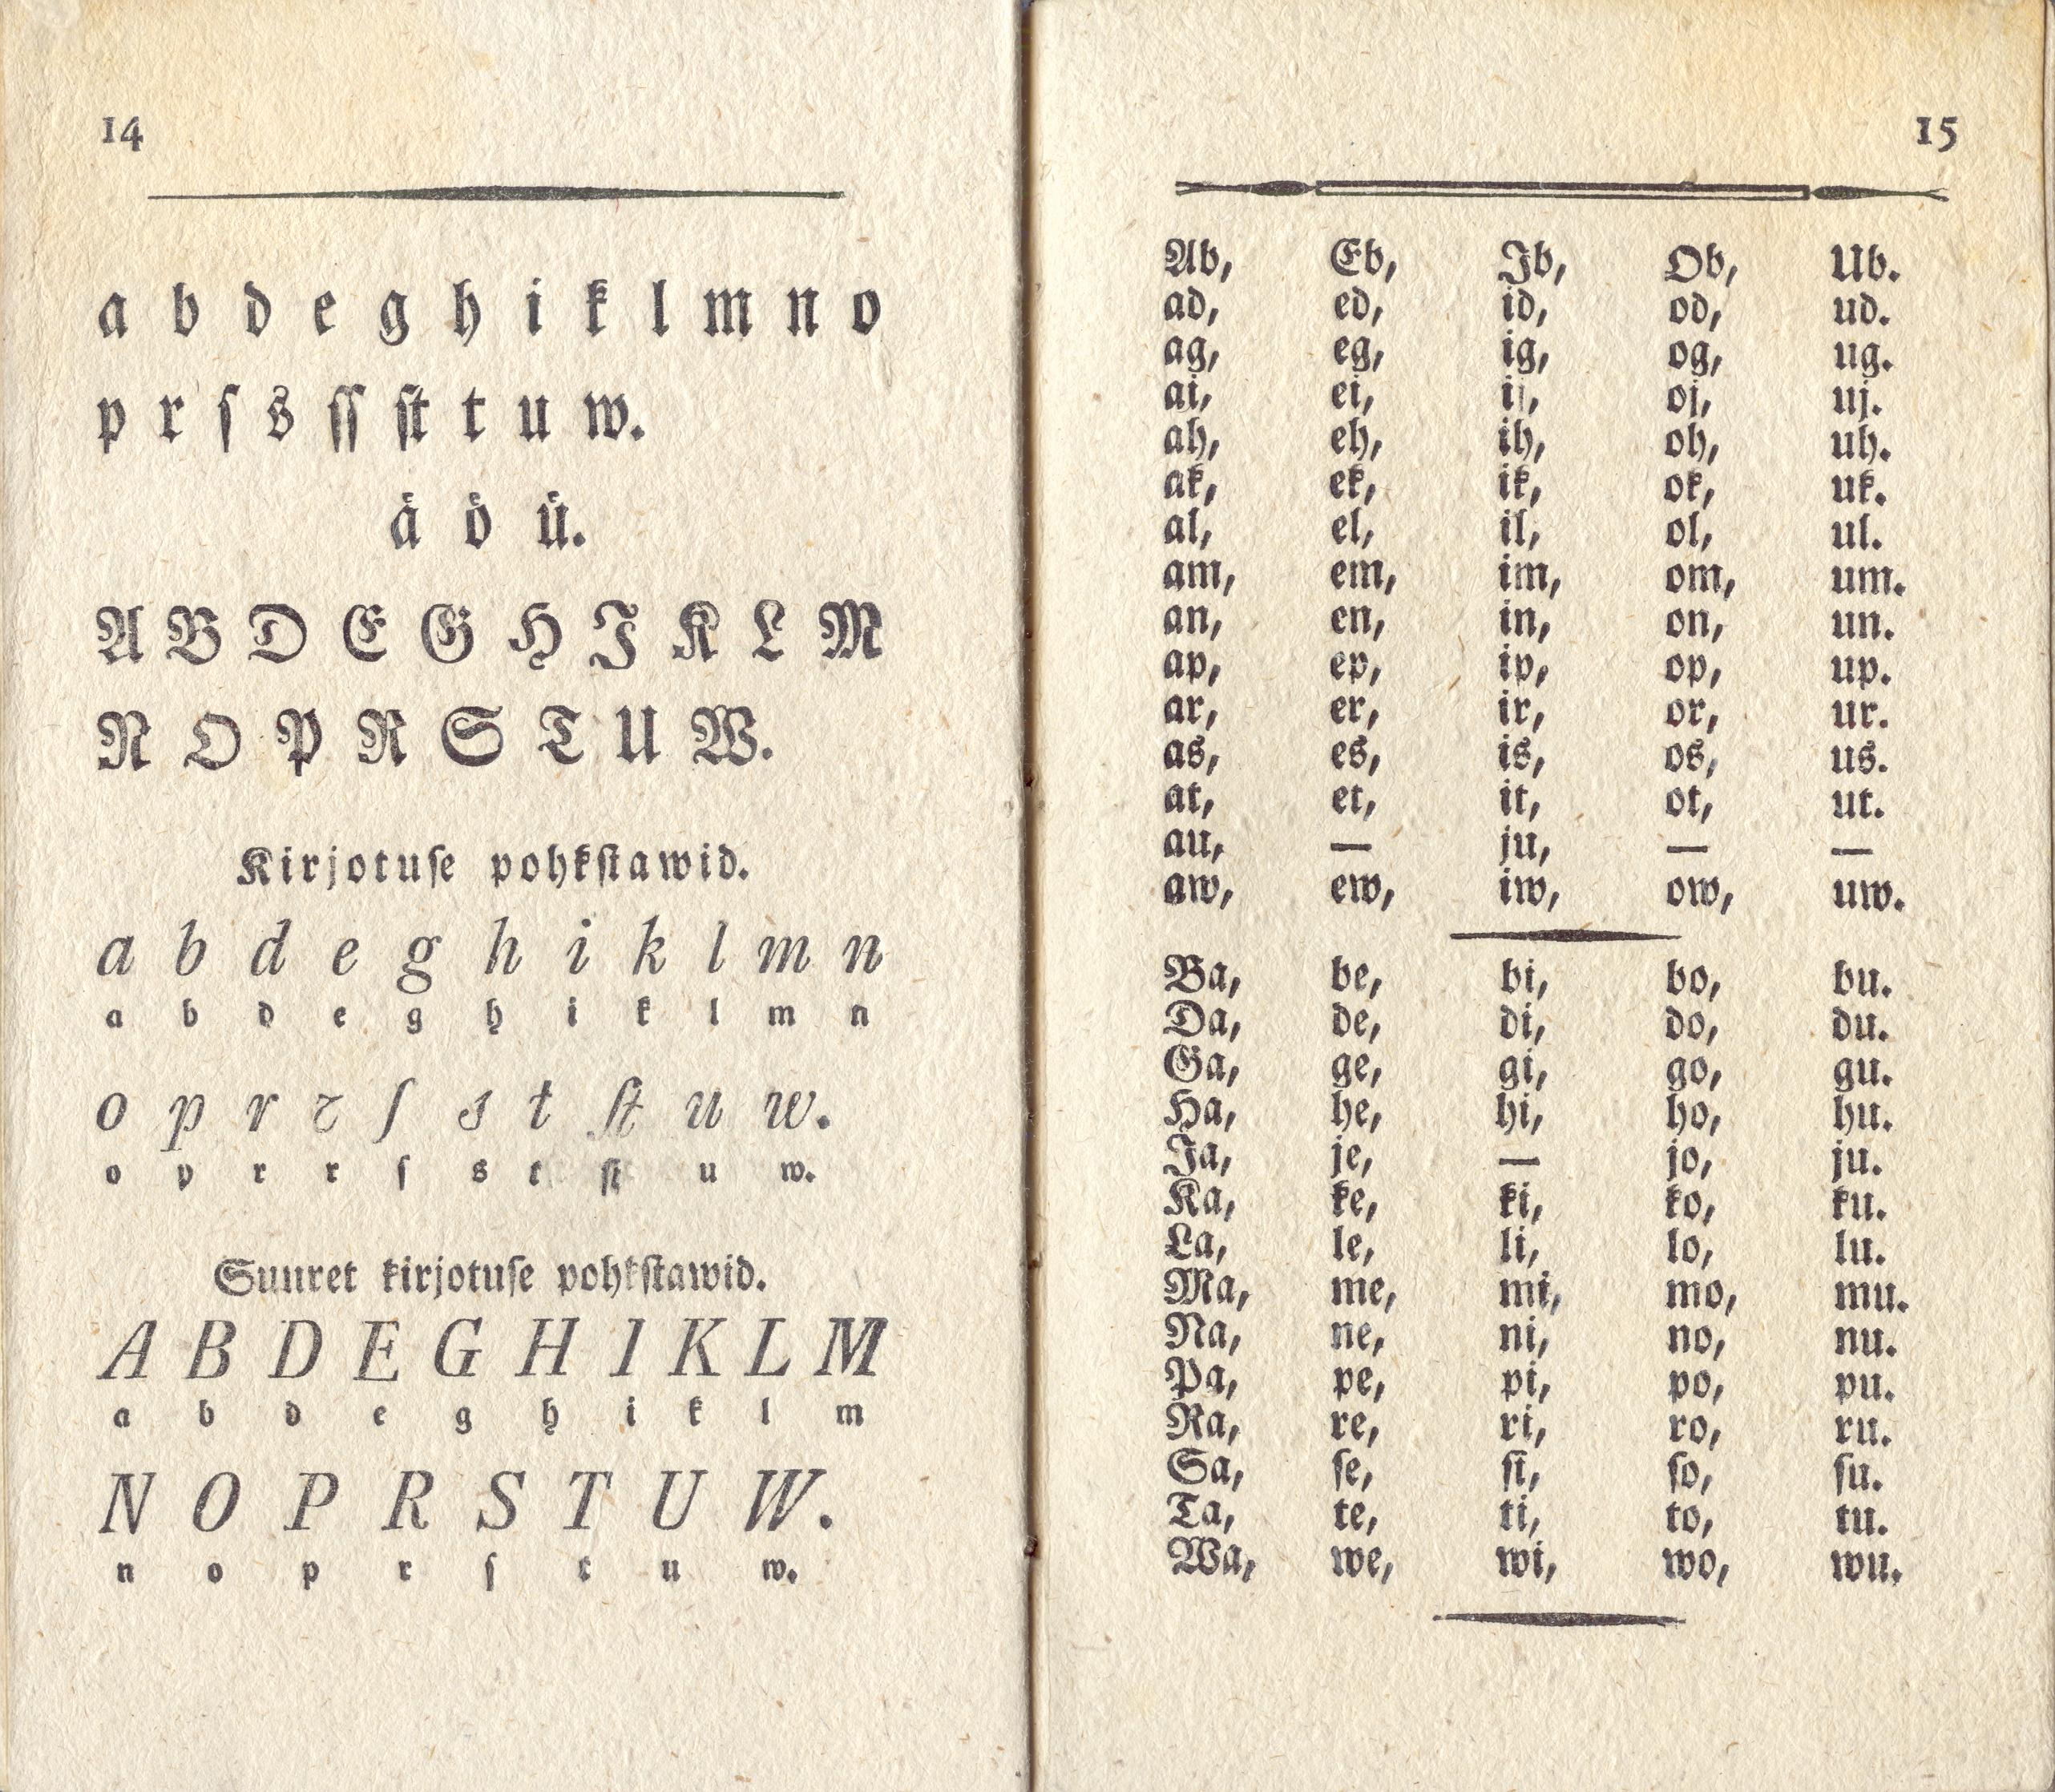 ABD ehk Luggemise-Ramat Lastele (1795) | 9. (14-15) Main body of text